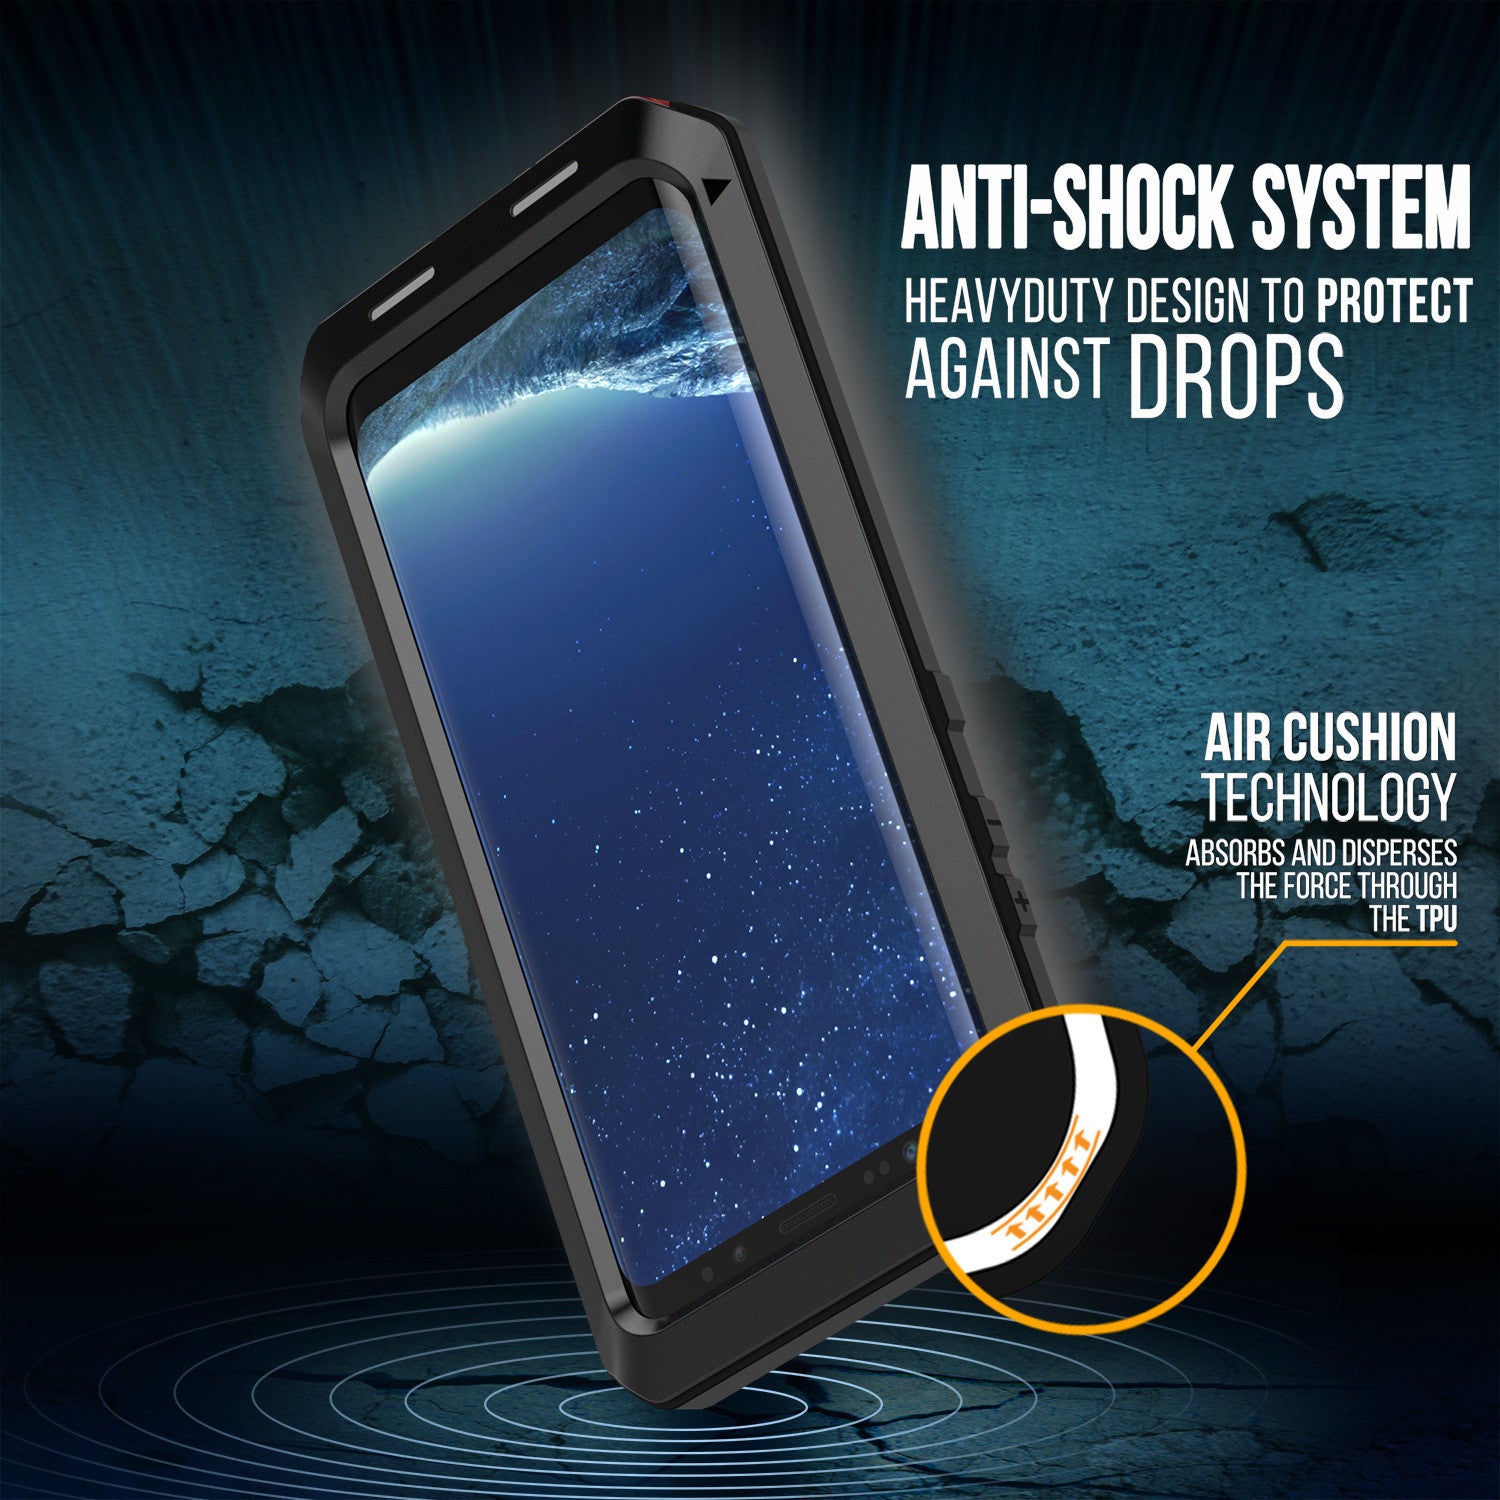 Galaxy S8+ Plus Case, PUNKcase Metallic Black Shockproof Slim Metal Armor Case